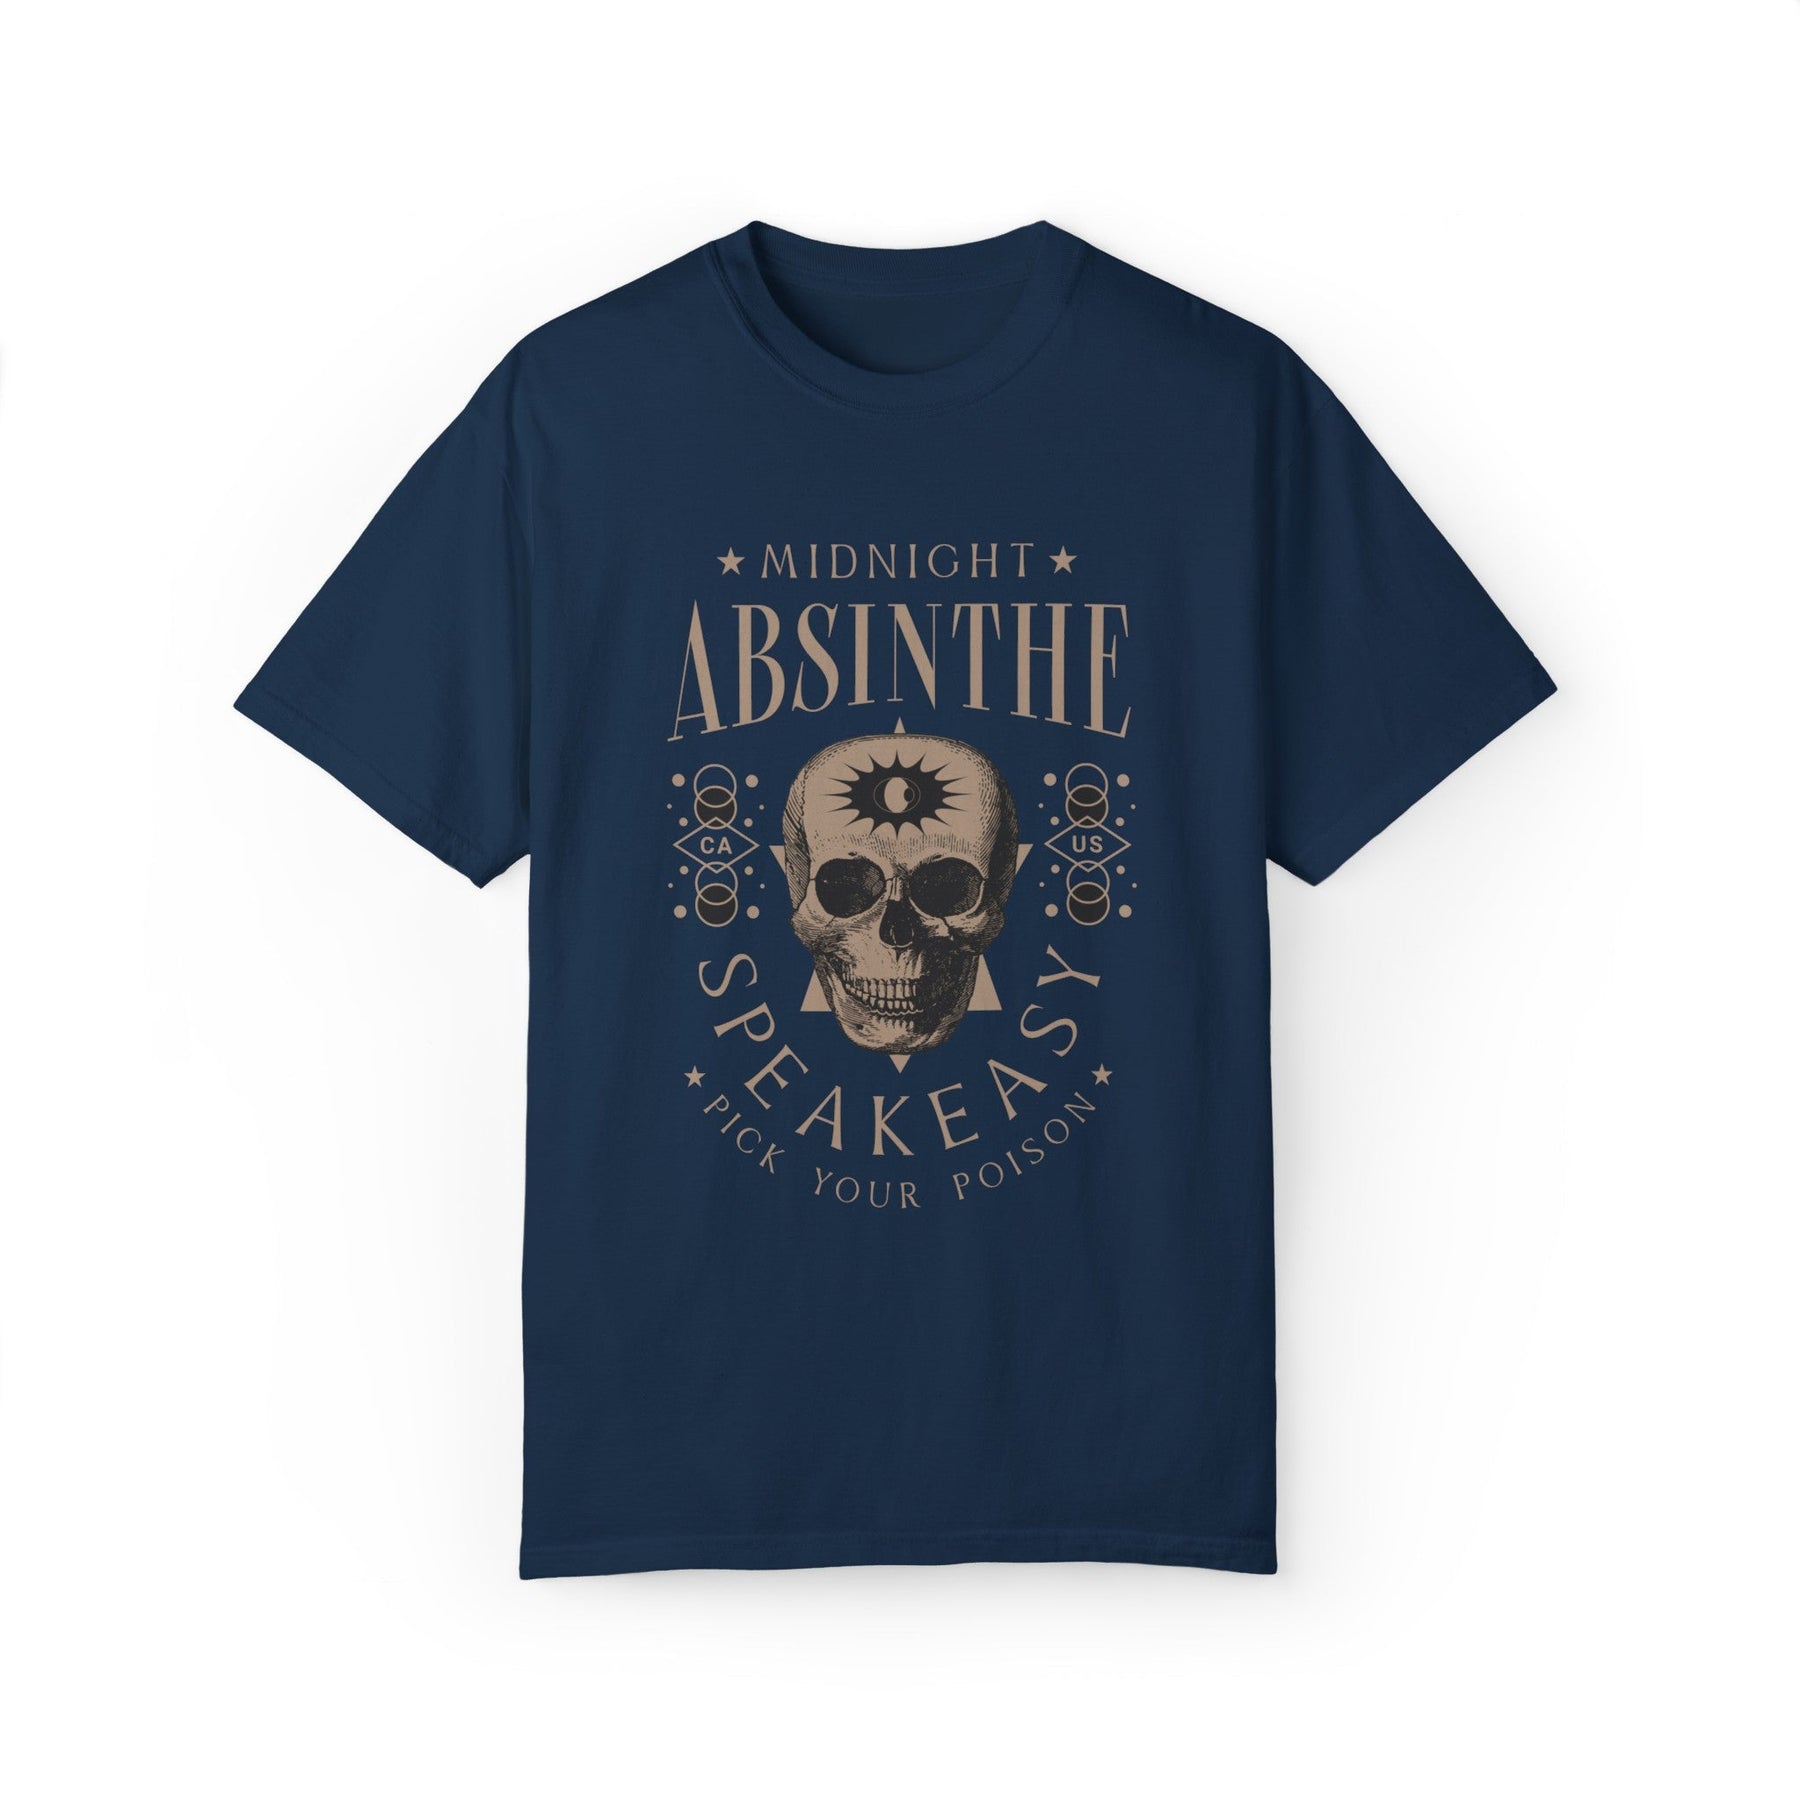 Midnight Absinthe Oversized Beefy Tee - Goth Cloth Co.T - Shirt31370840851691007070